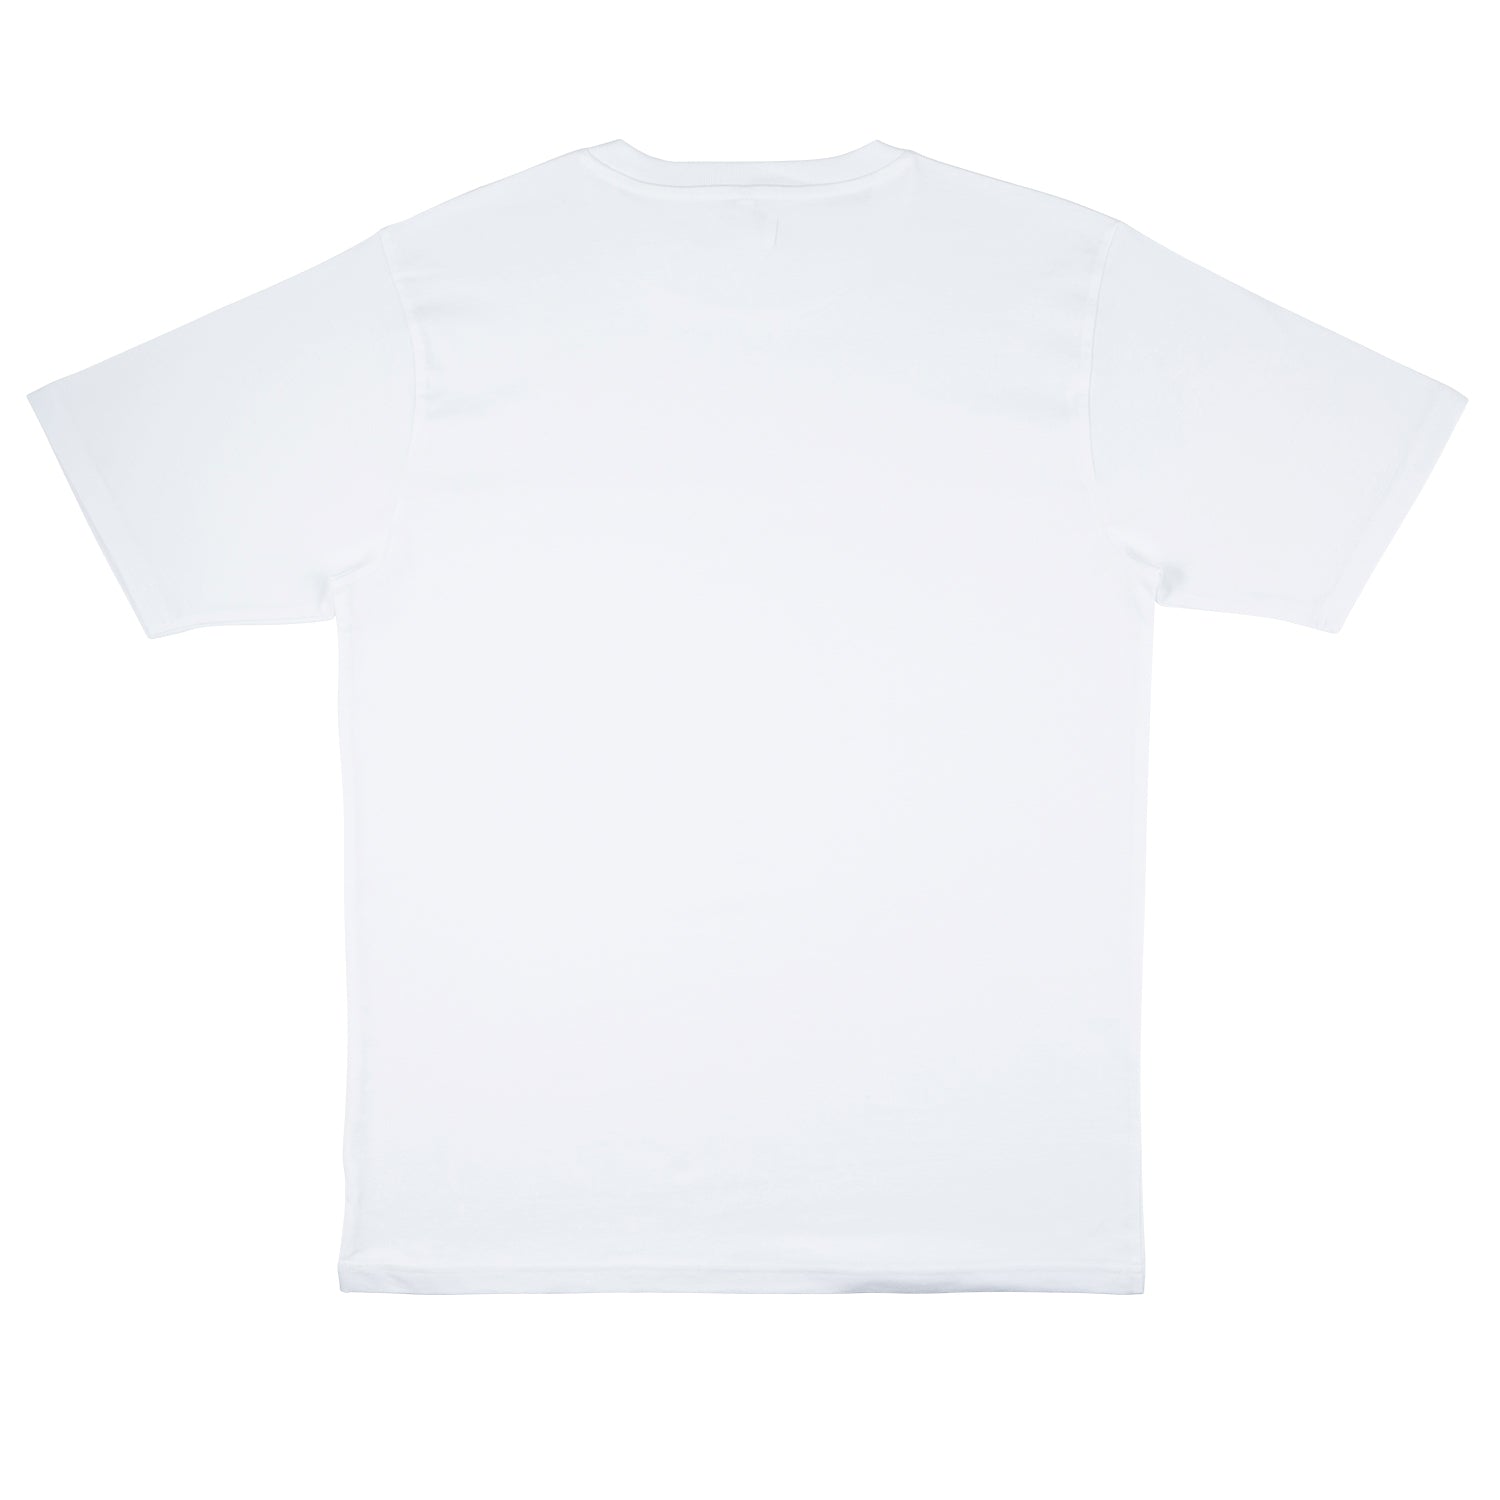 Florero T-Shirt White